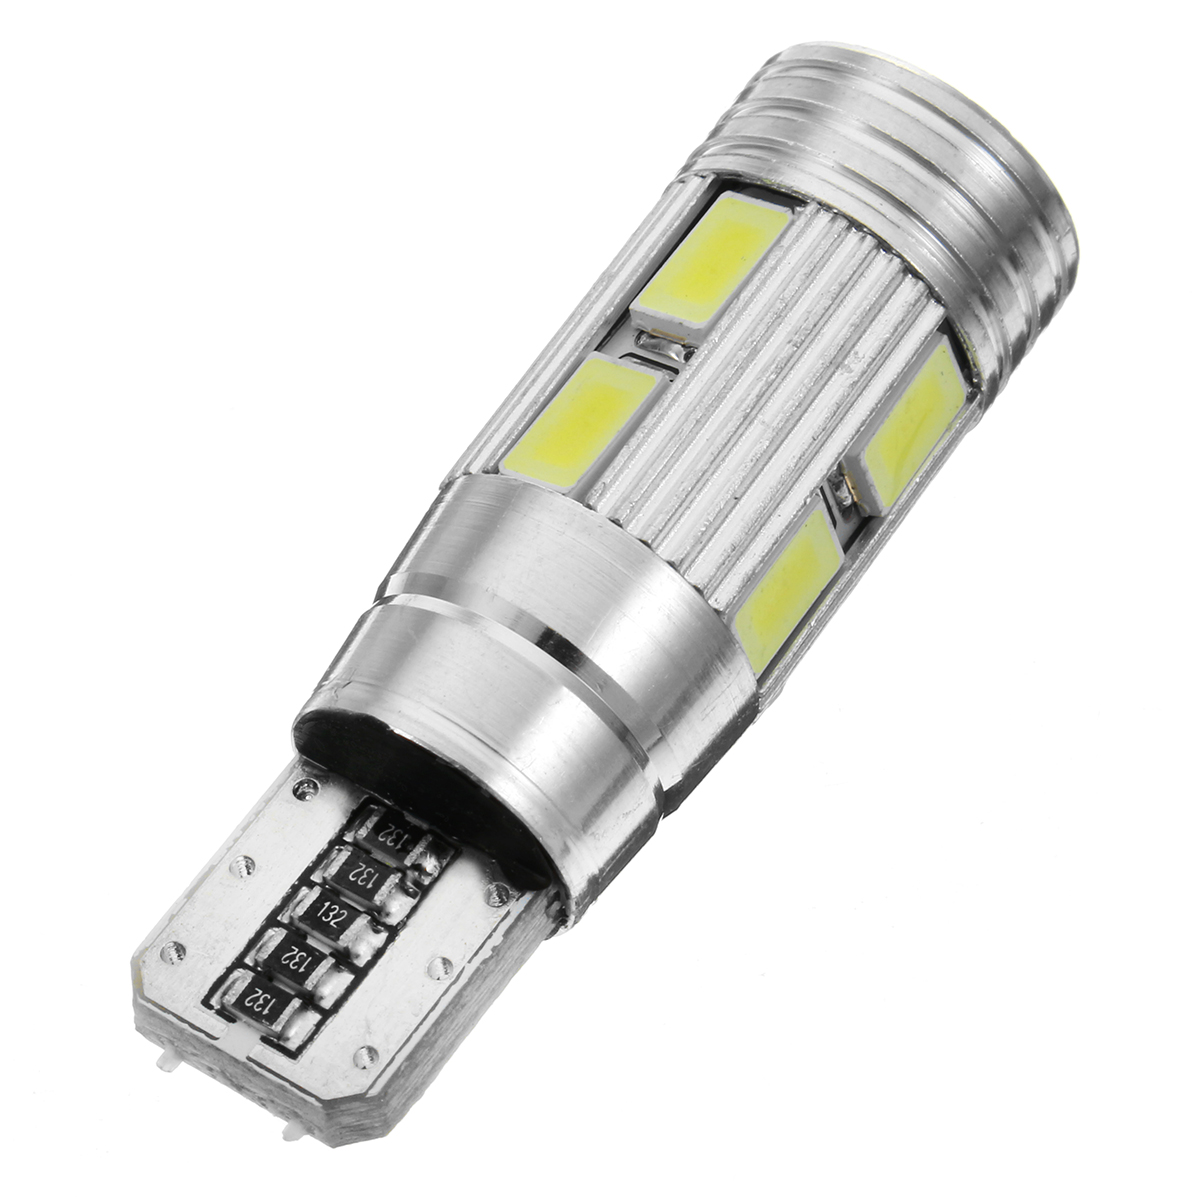 2Pcs T10 W5W LED Wedge Car Side Marker Lights Bulb Lamp with Lens 5W 450LM DC12V